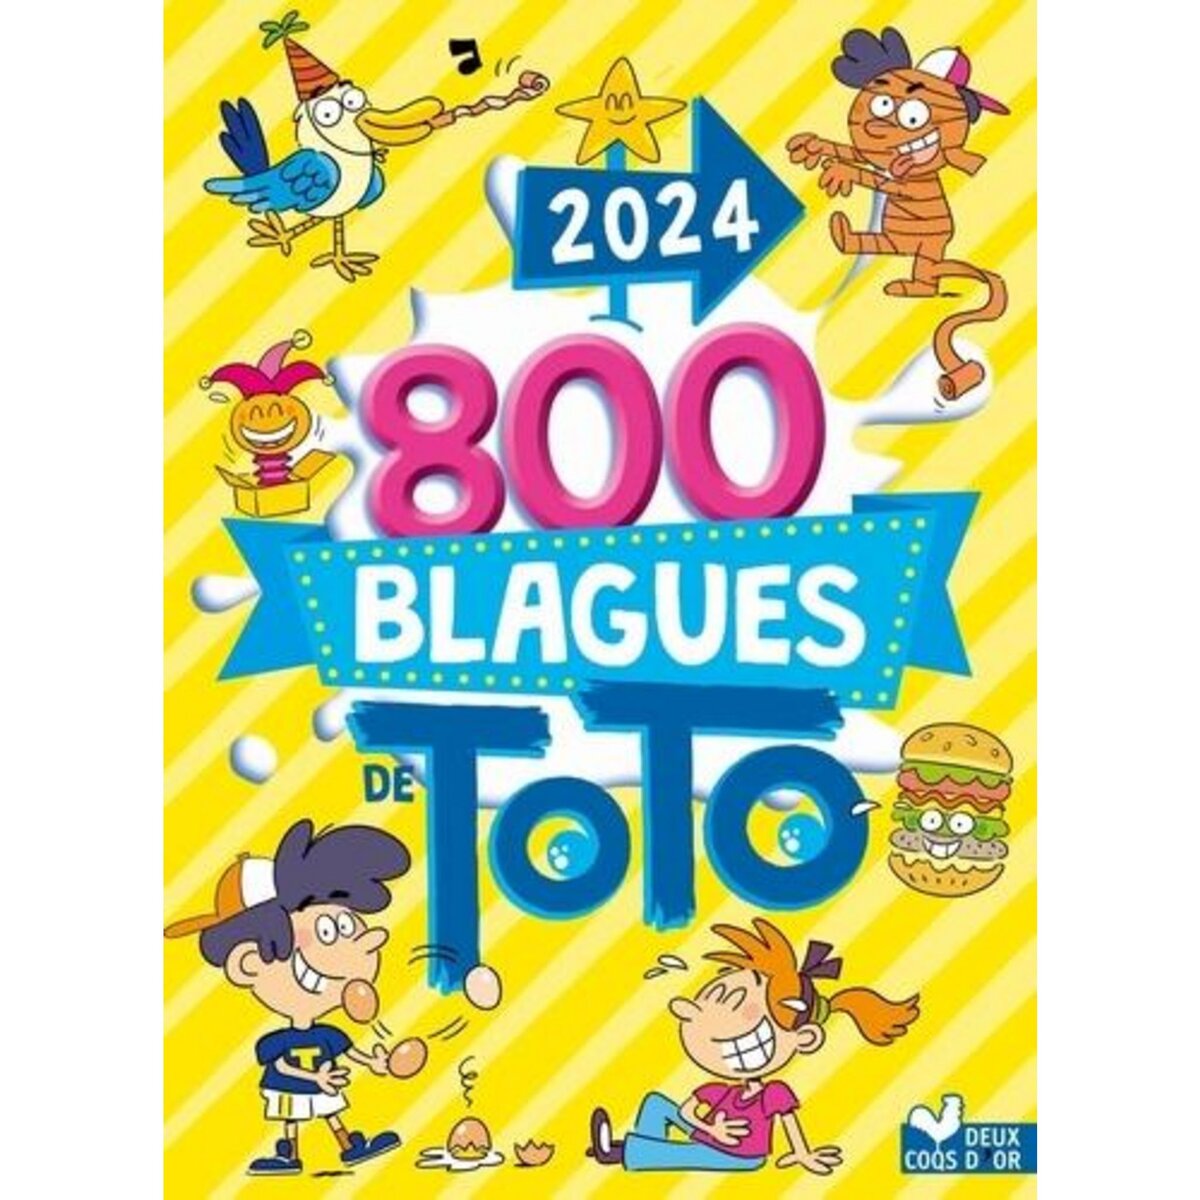  800 BLAGUES DE TOTO. EDITION 2024, Naud Pascal